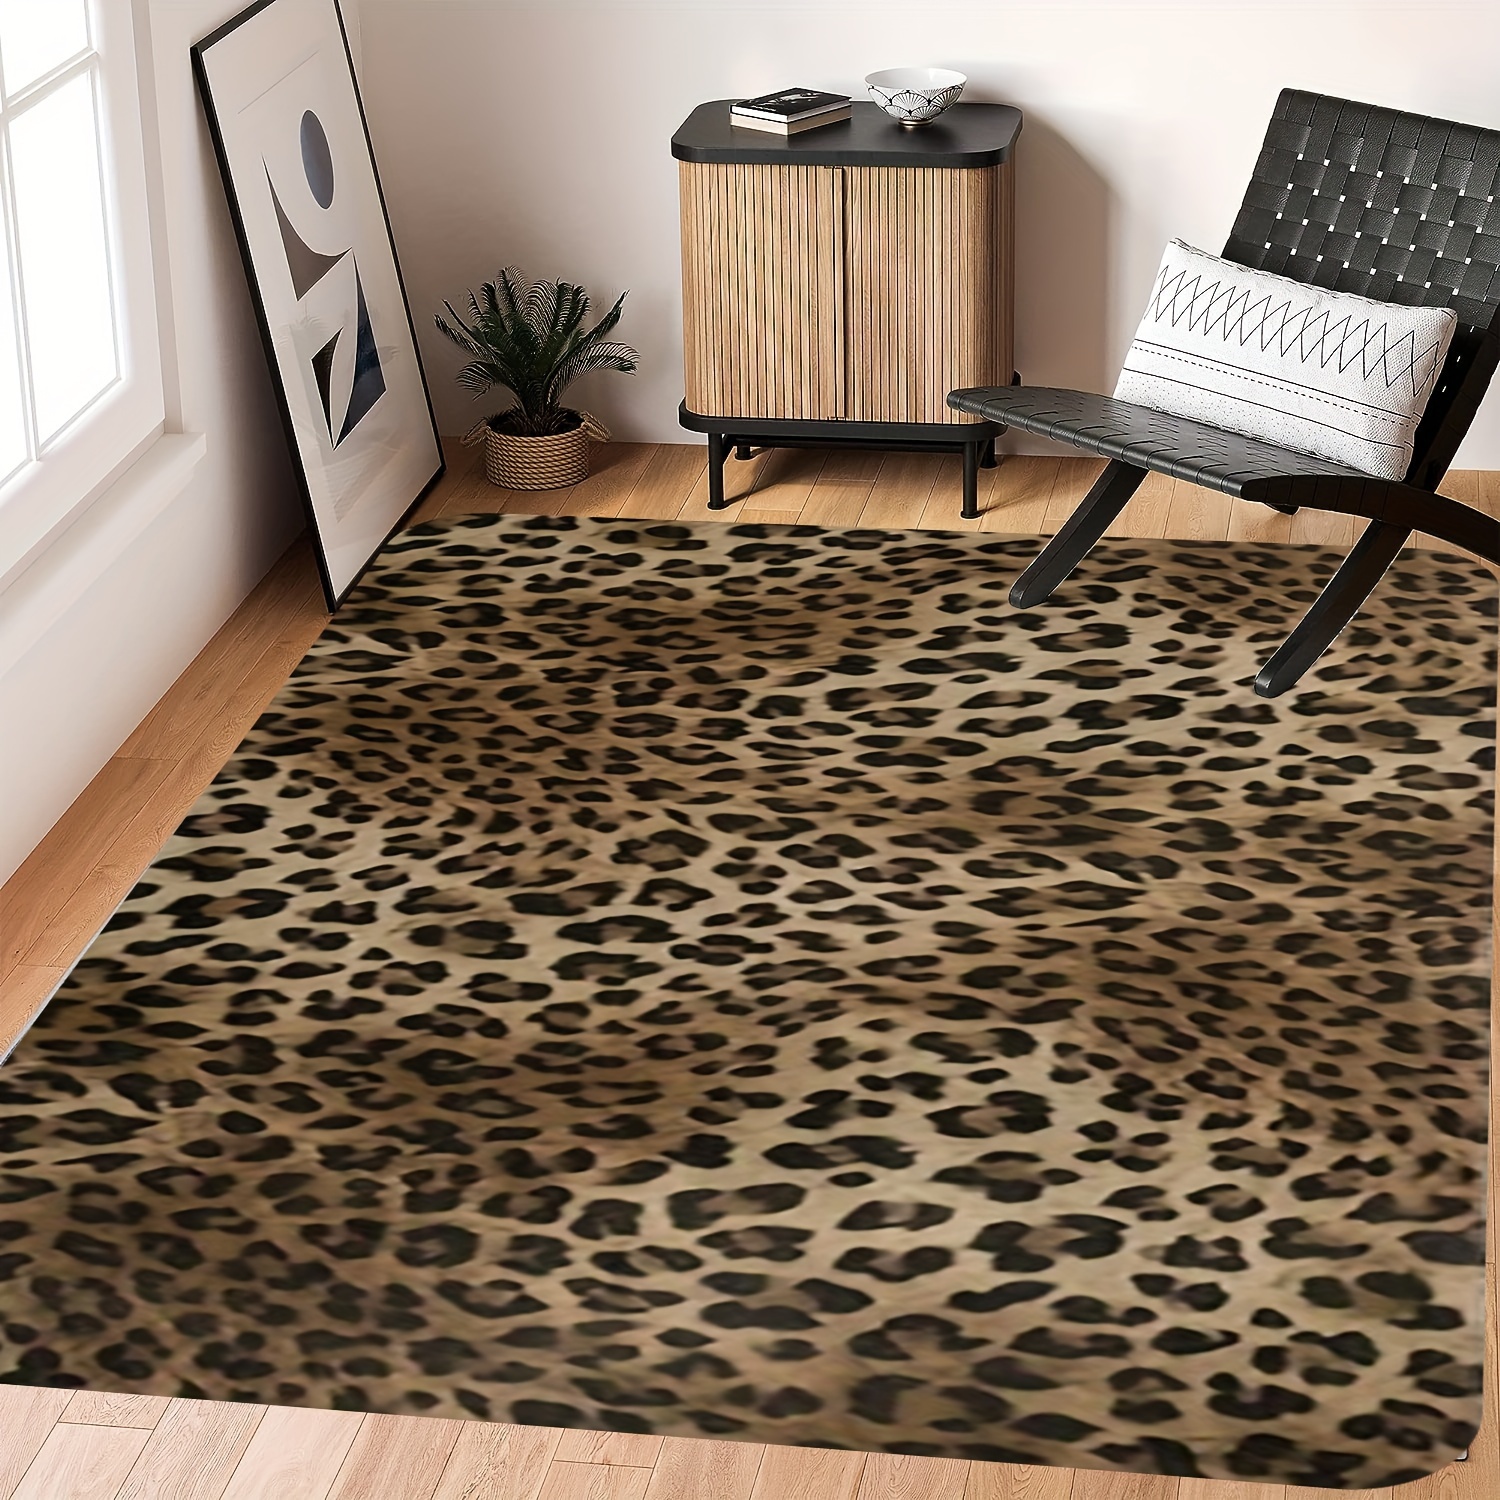 

1pc, Leopard Print Indoor Mat, Flannel Area Rug, Non-slip Floor Carpet, Home Decor, Room Decor, Home Kitchen Items